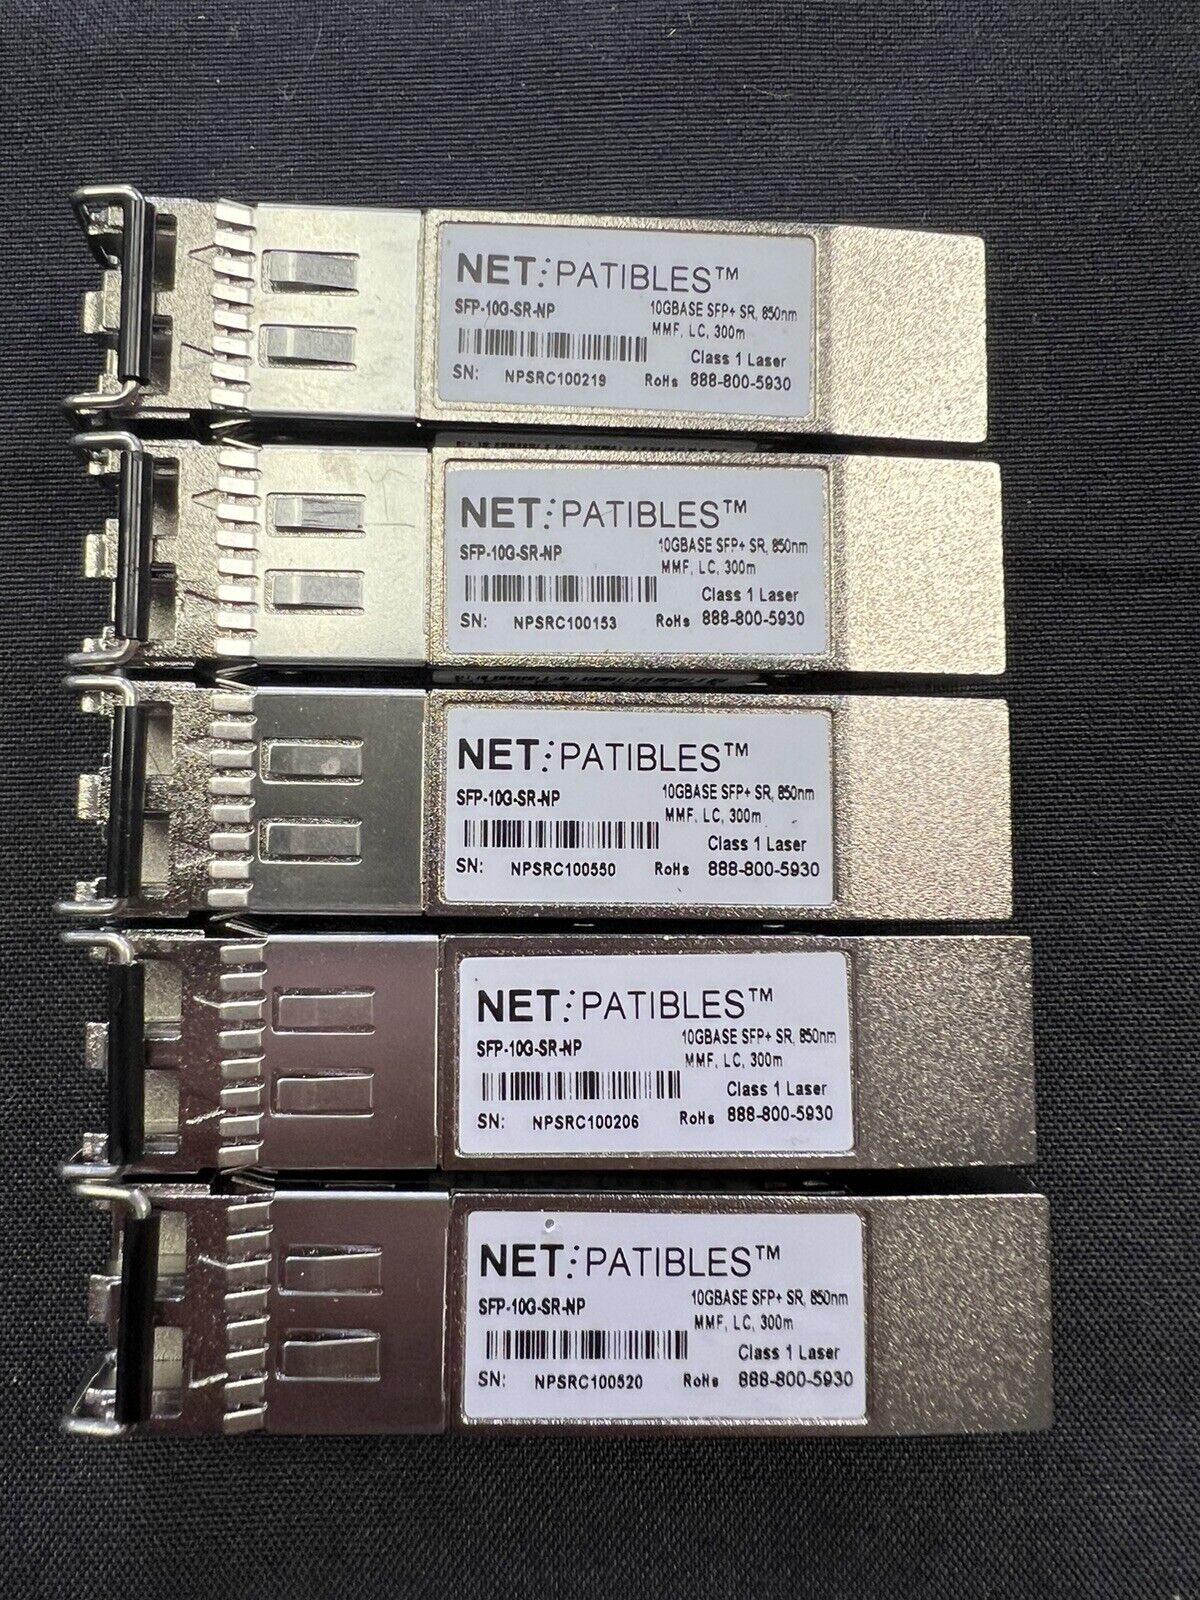 LOT OF 5 Netpatibles SFP-10G-SR-NP  10GBE SFP+ SR 850nm MMF LC 300M Transceiver